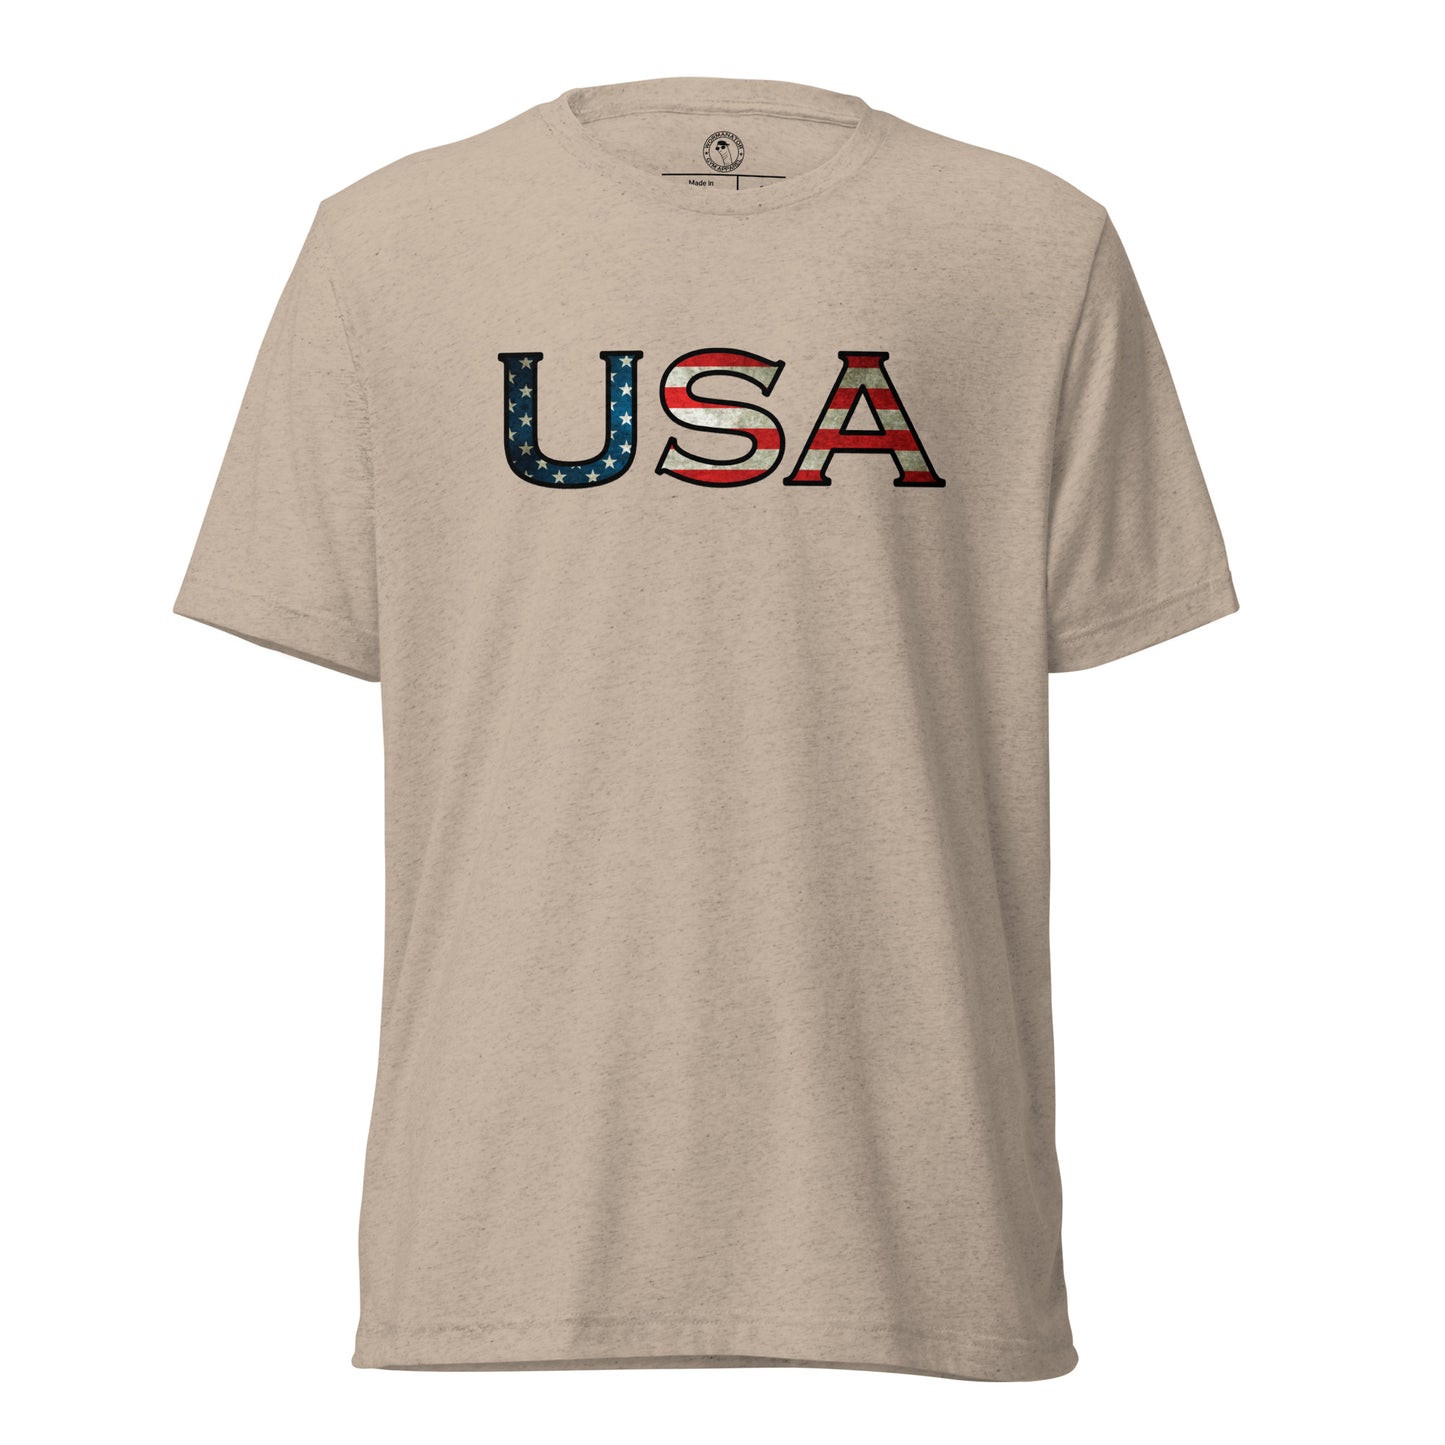 USA T-Shirt in Tan Triblend